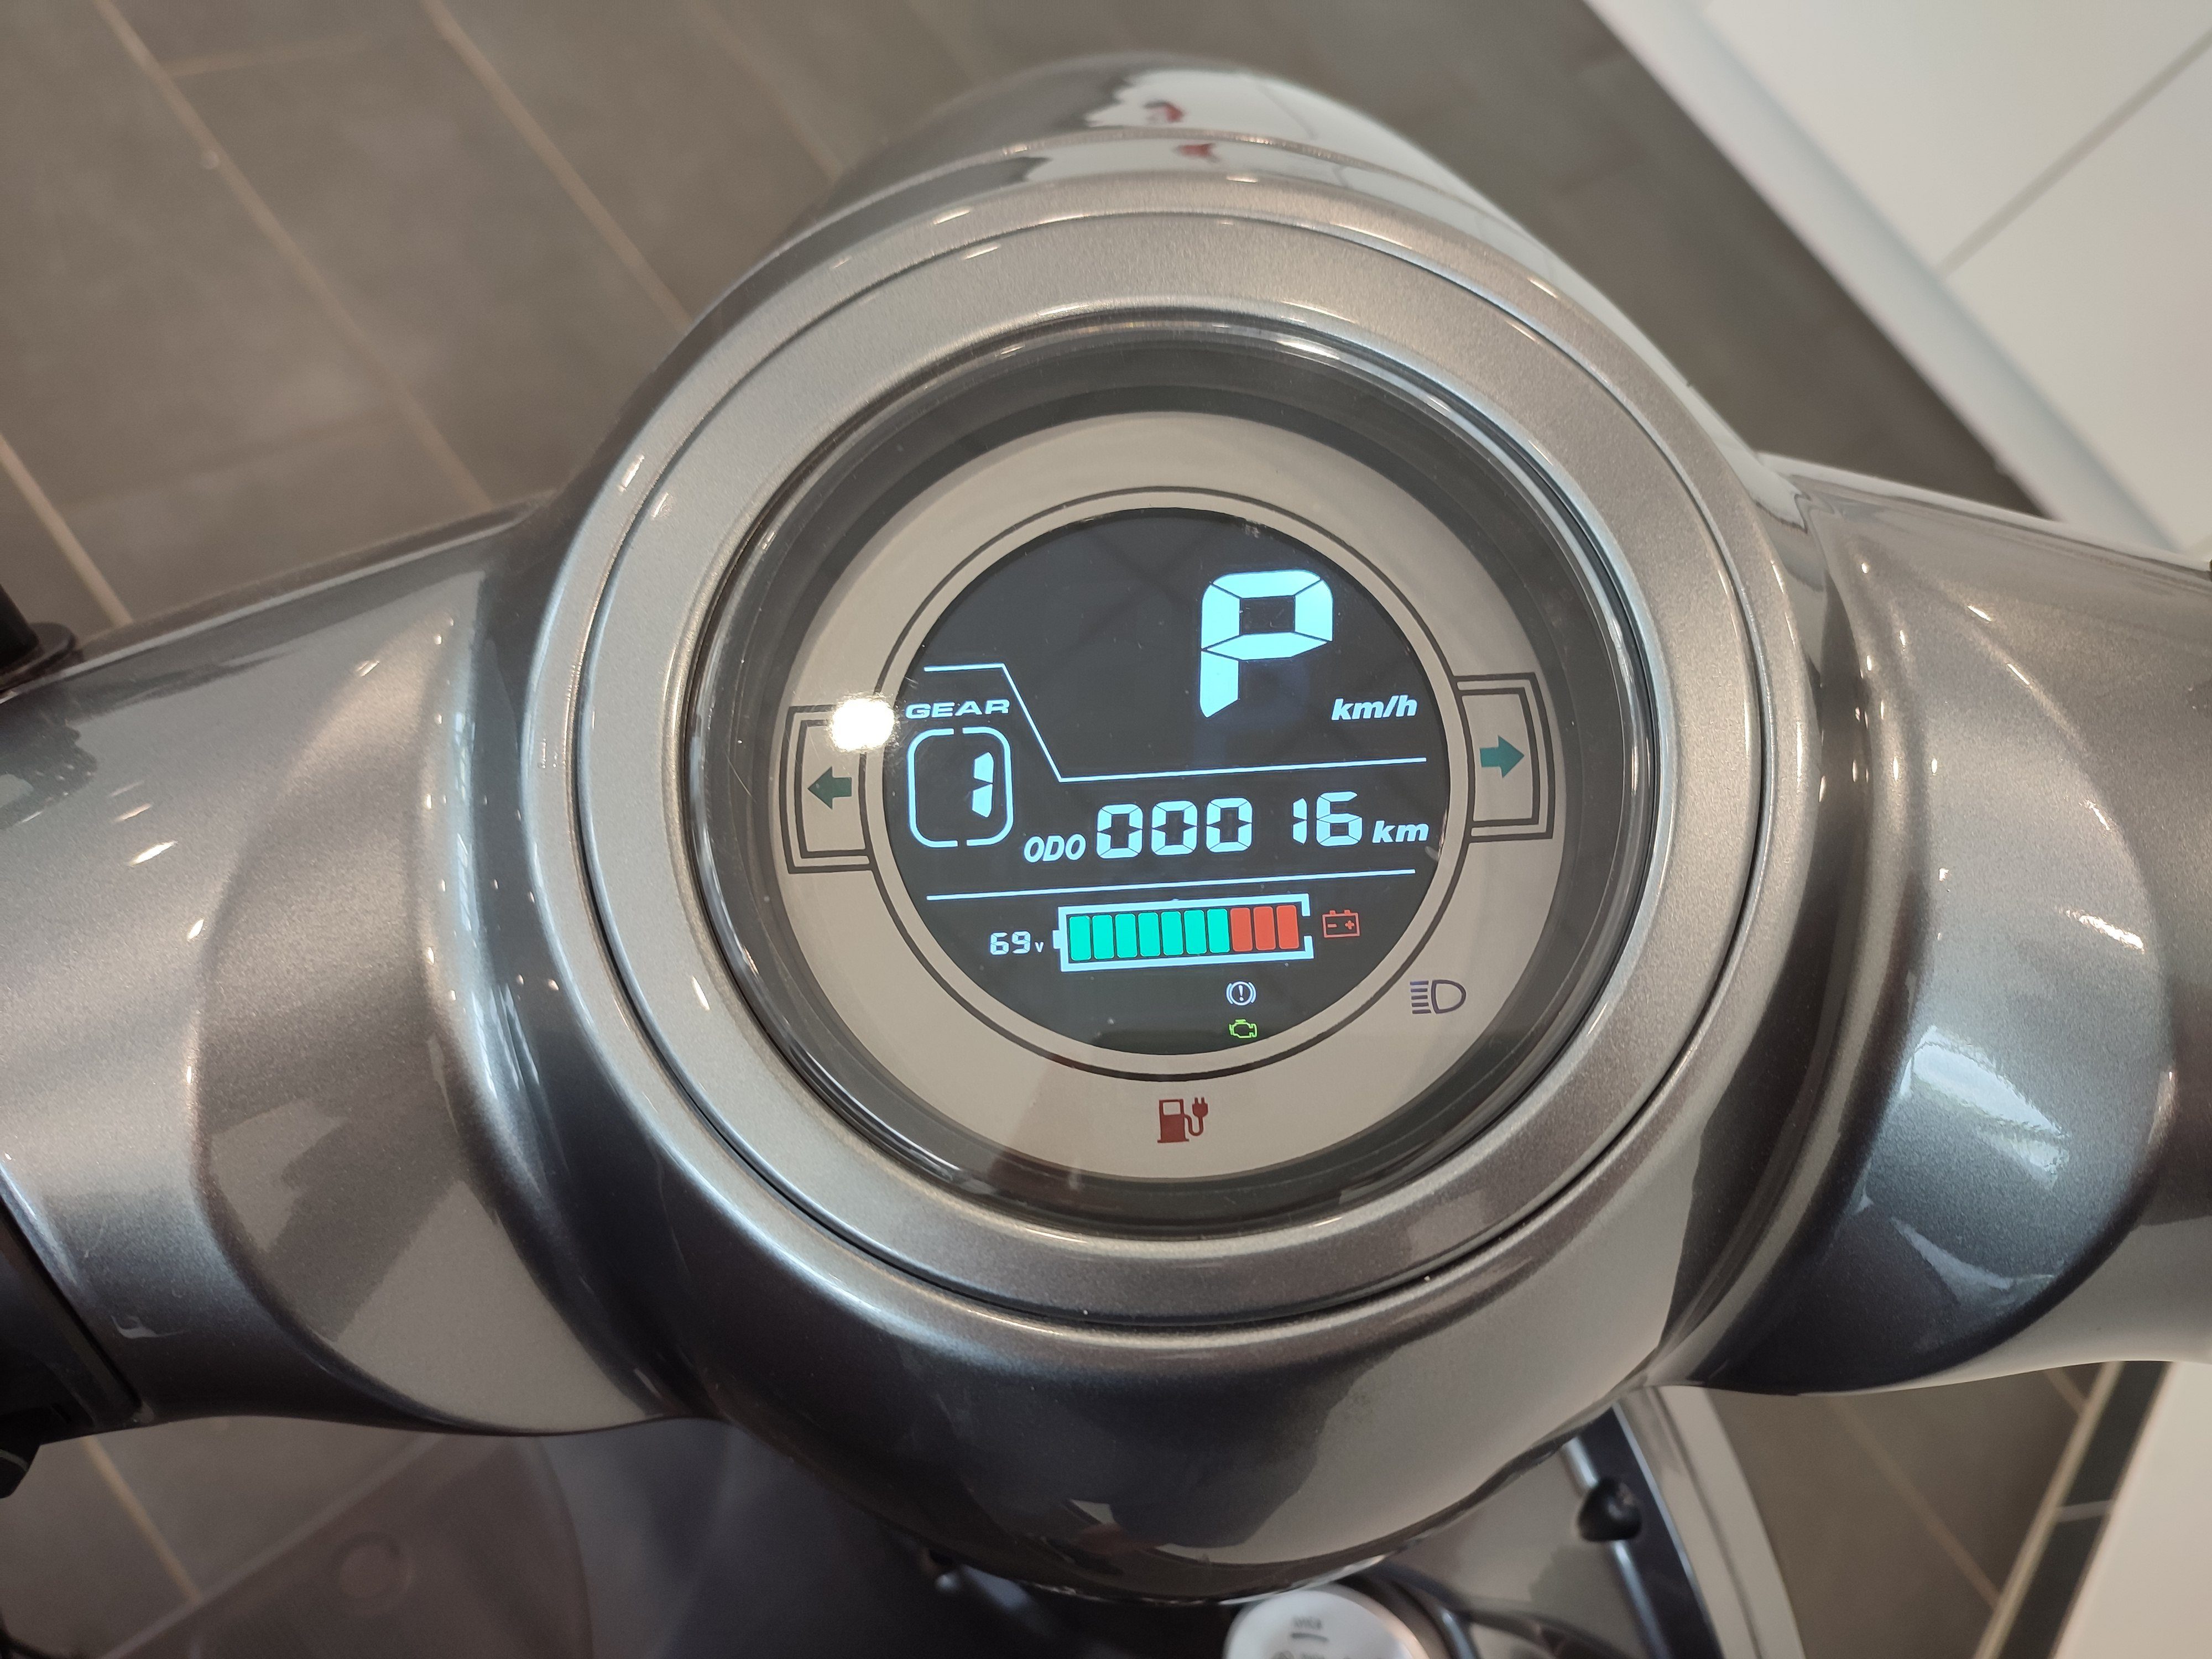 E-Motorroller 75 W, silbergrau 5500 km/h, inklusive Sun-S, Topcase e-kuma